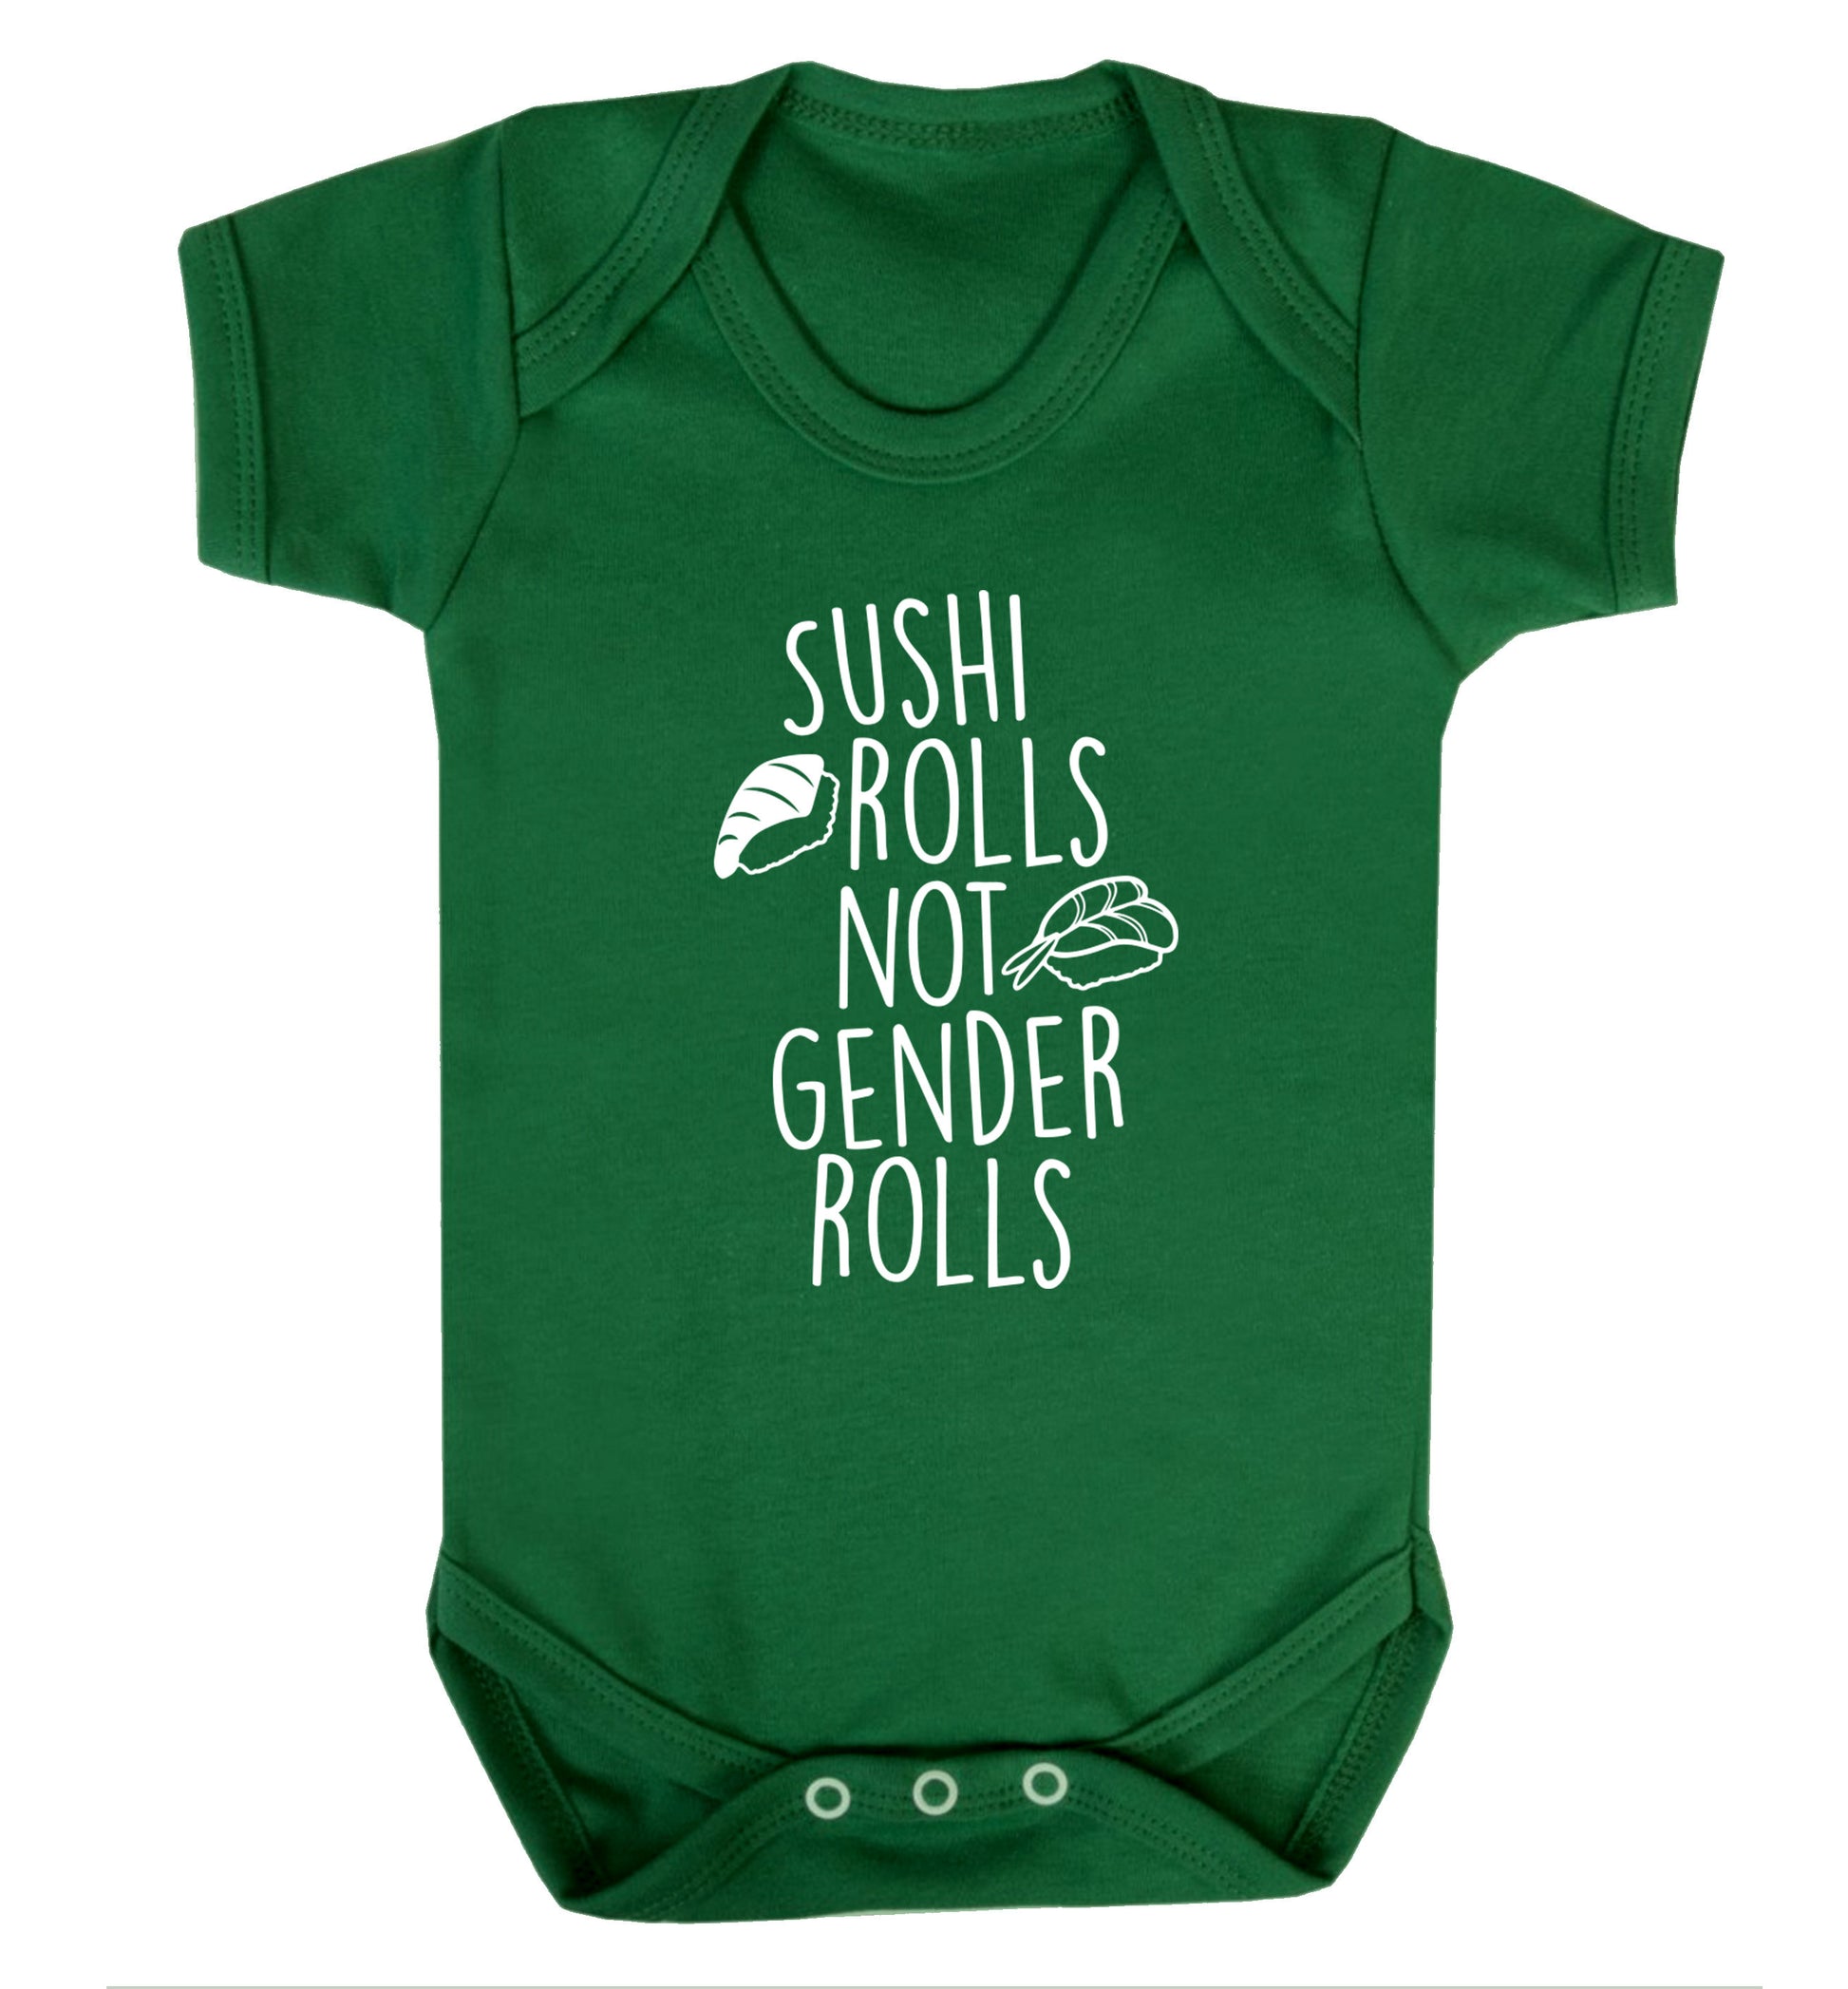 Sushi rolls not gender rolls Baby Vest green 18-24 months